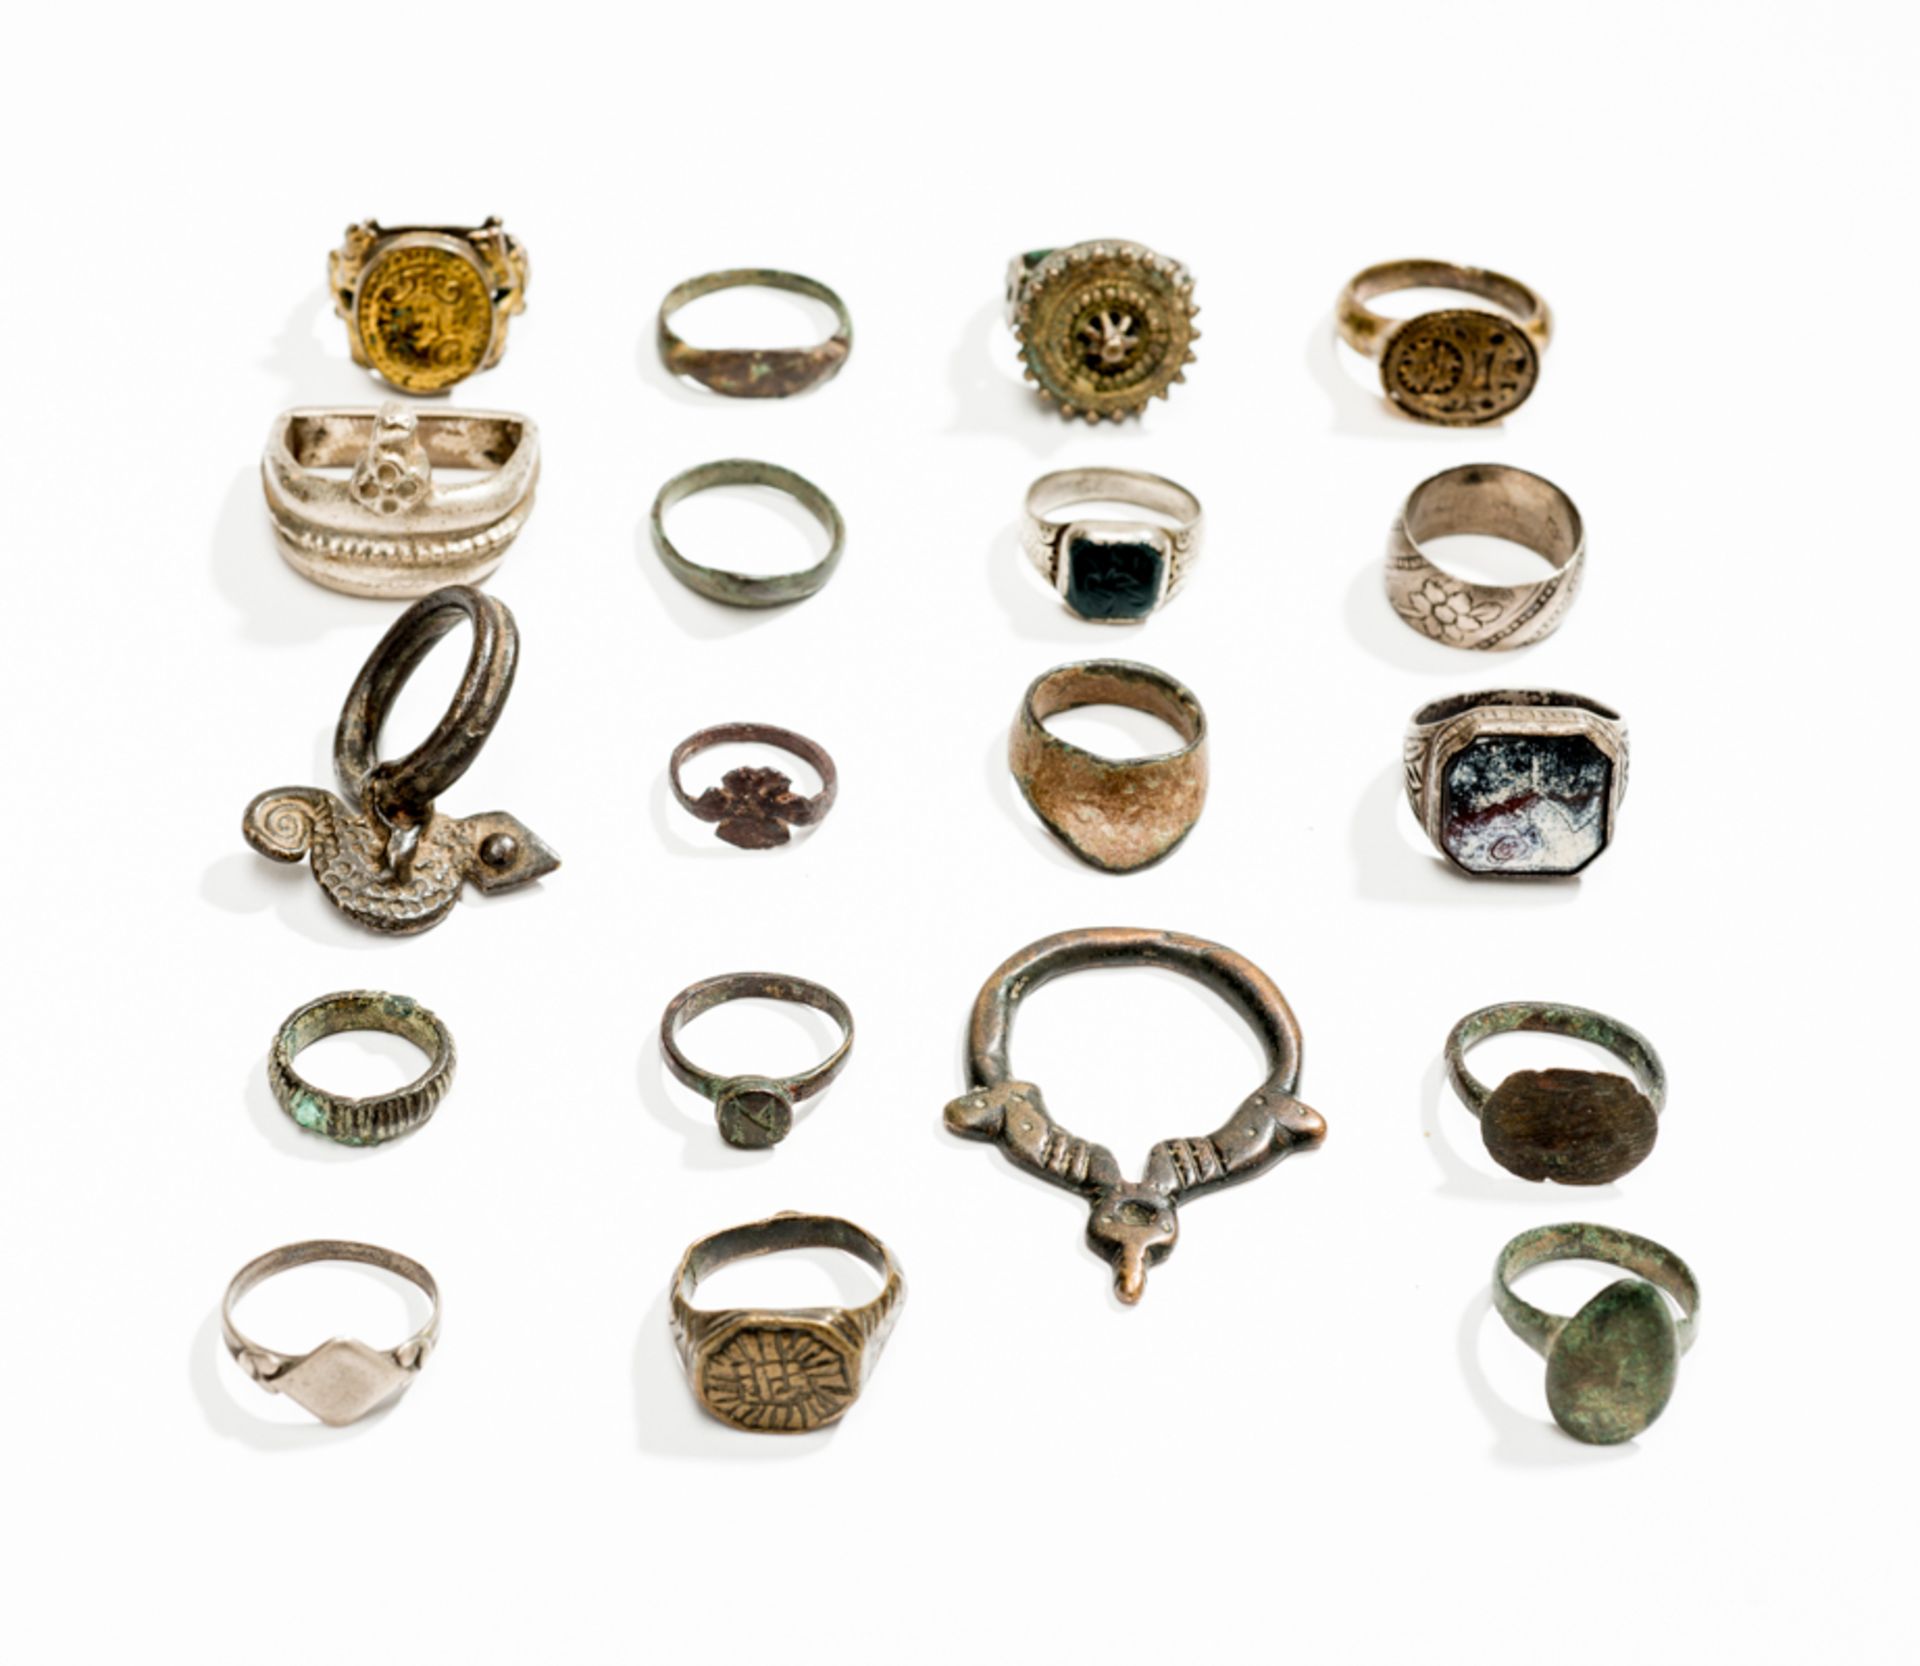 SELTENE SAMMLUNG AN 19 RINGENMessing, Bronze, Silber, Vergoldung, Eisen, Steine. Tibet, ca. 17. –